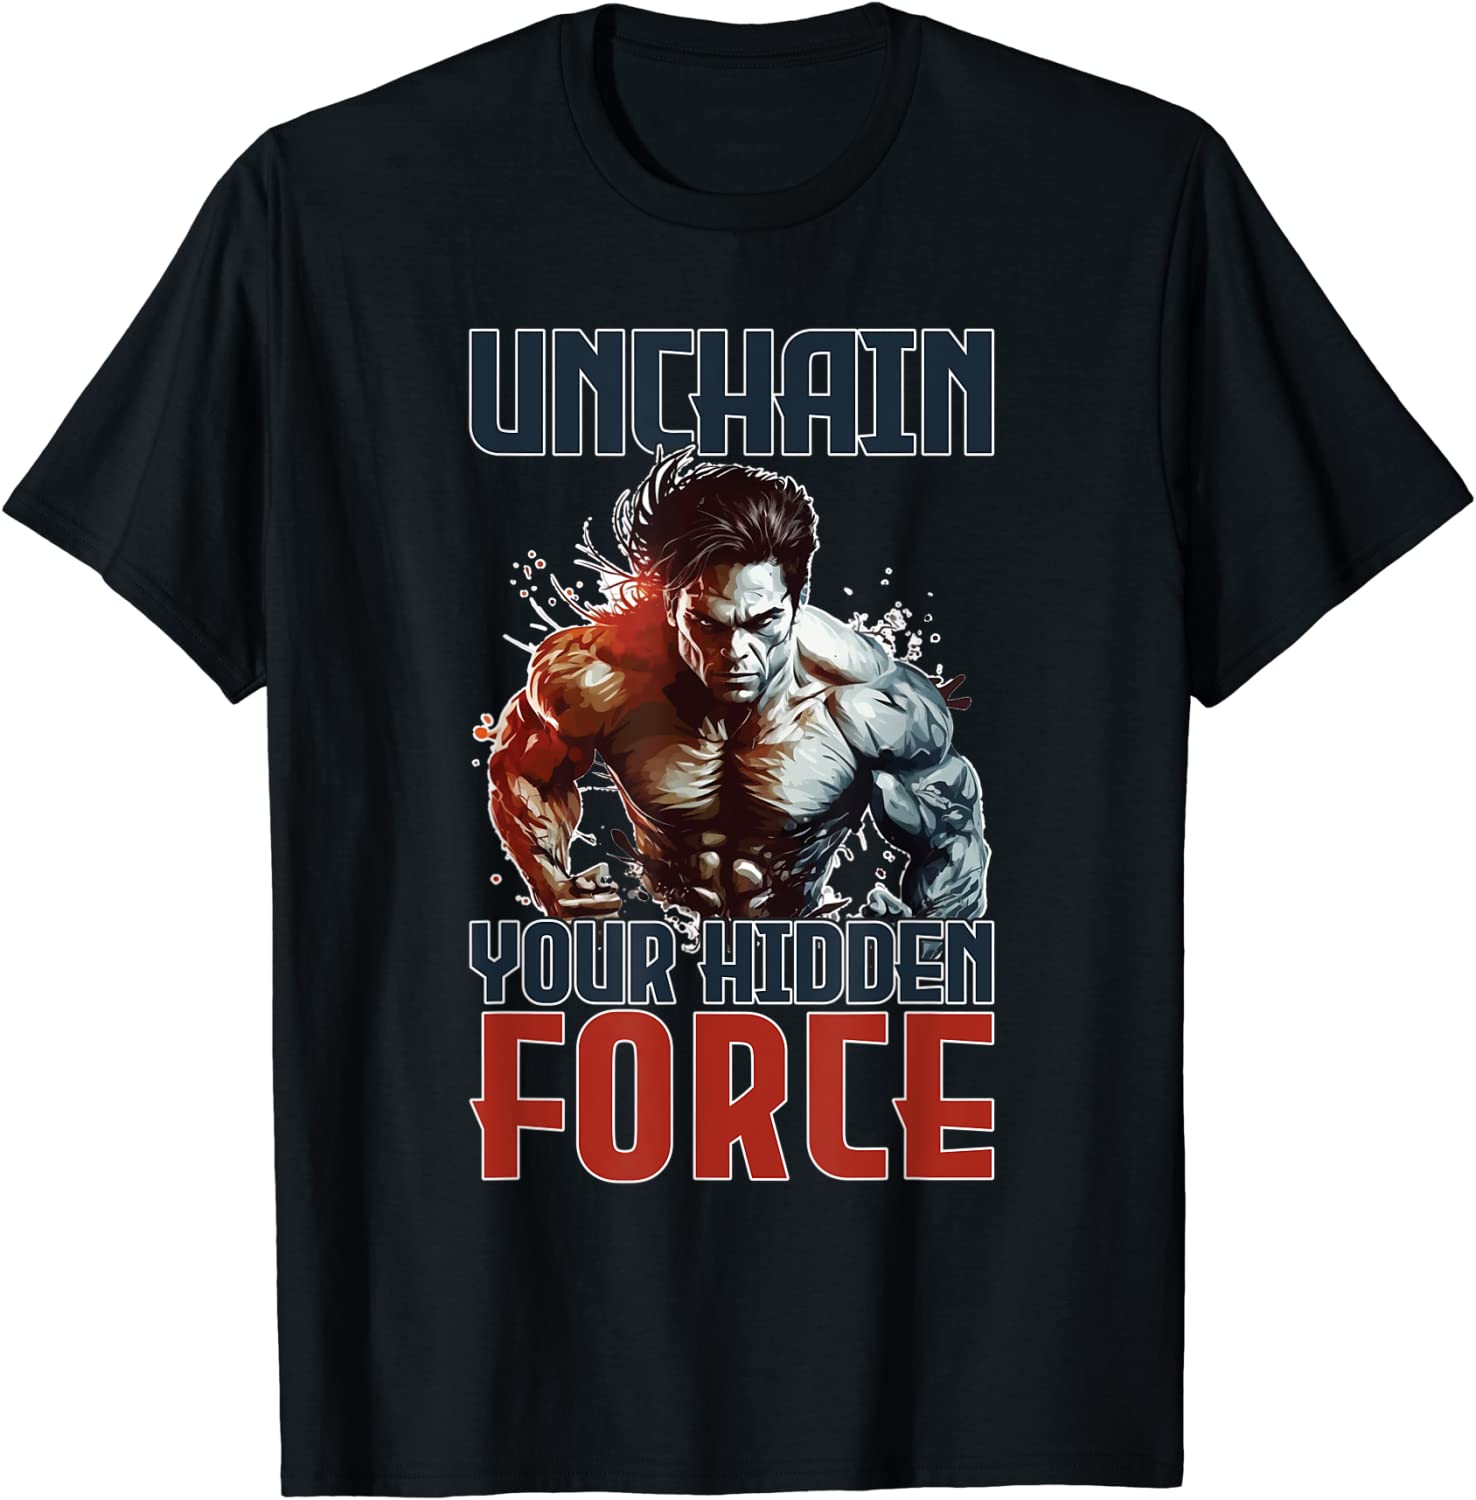 Unchain your hidden force Motivational Fitness T-Shirt Best Price